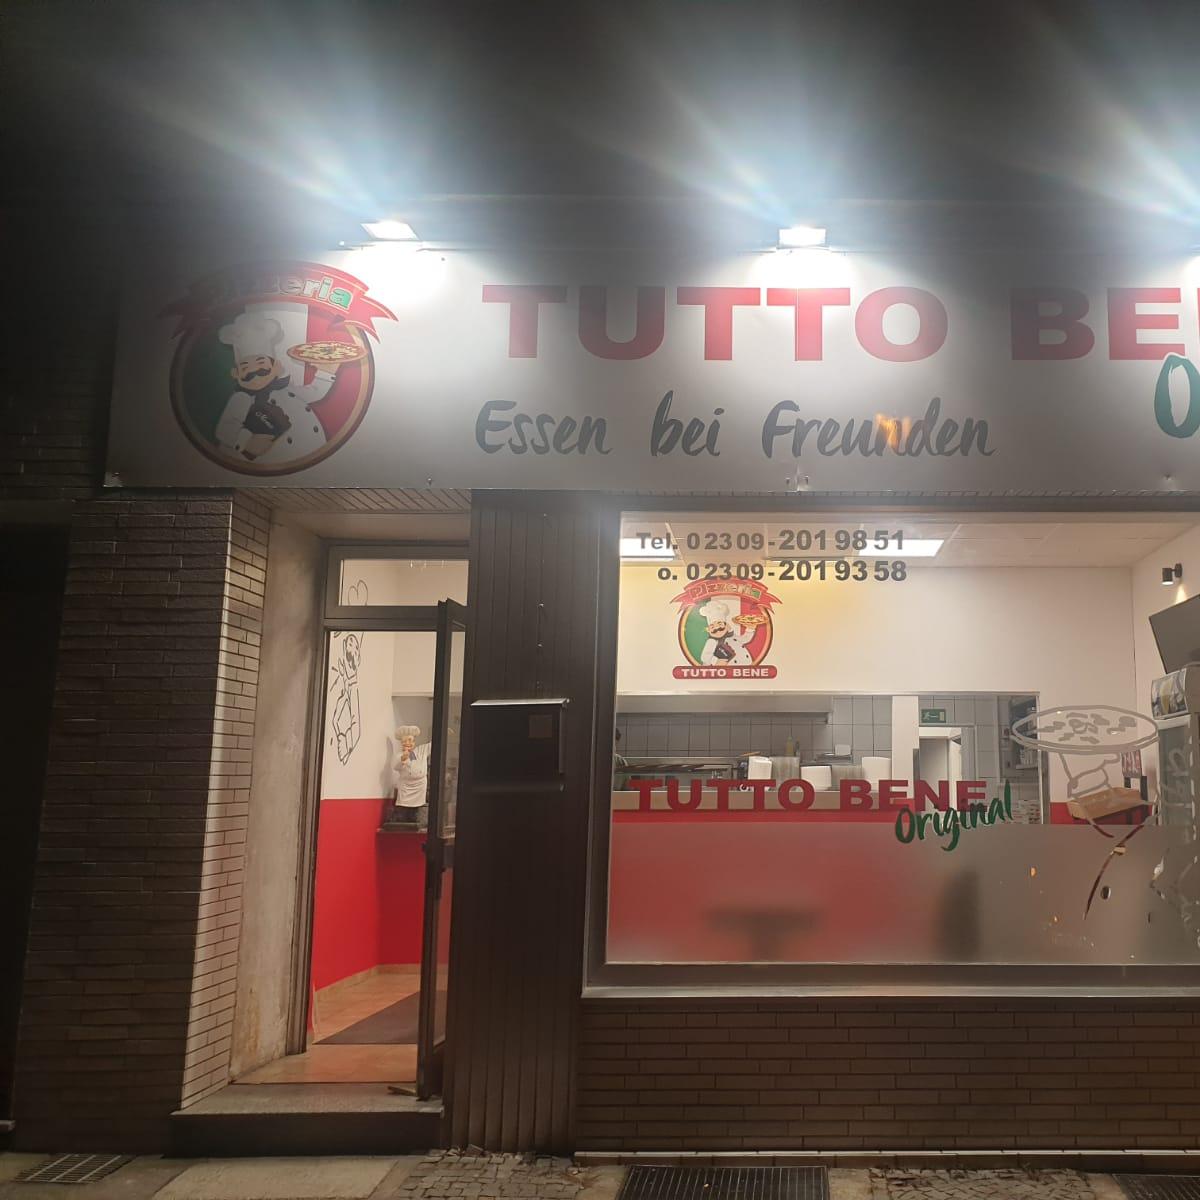 Restaurant "Tutto Bene Original" in Waltrop